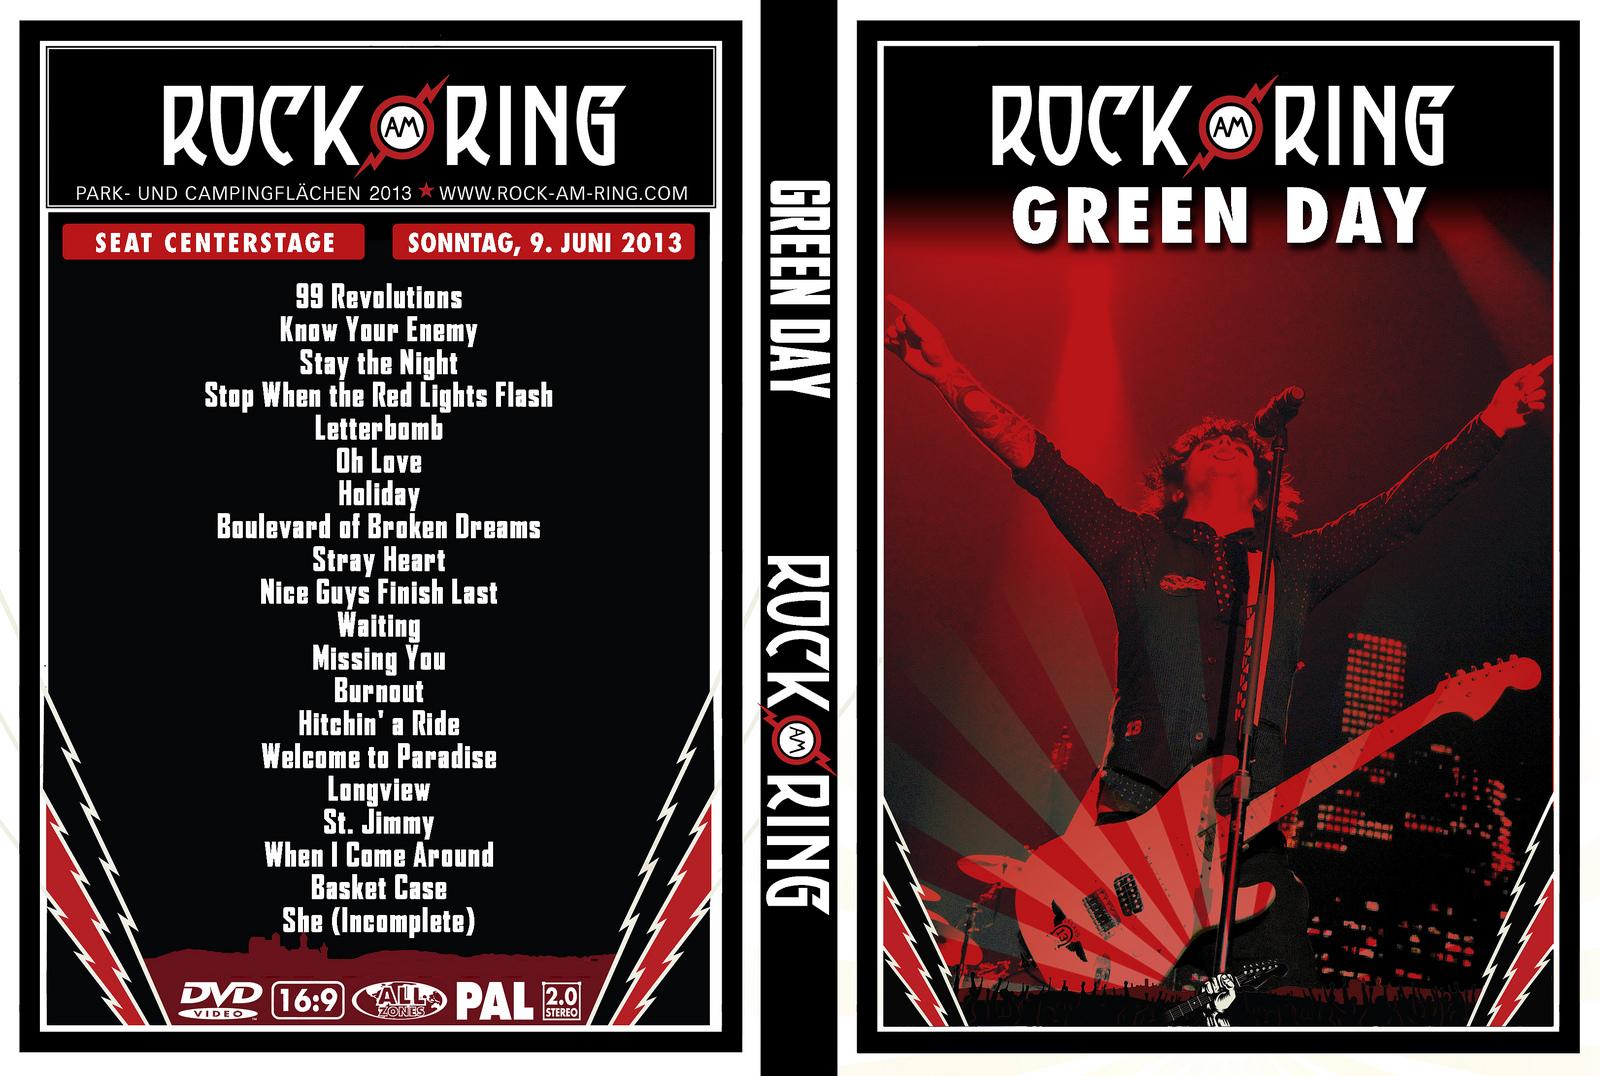 BANCA DO ROCK Rock Concert DVD: 2444 - DVD - GREEN DAY 2013 - BOOTLEG1600 x 1076